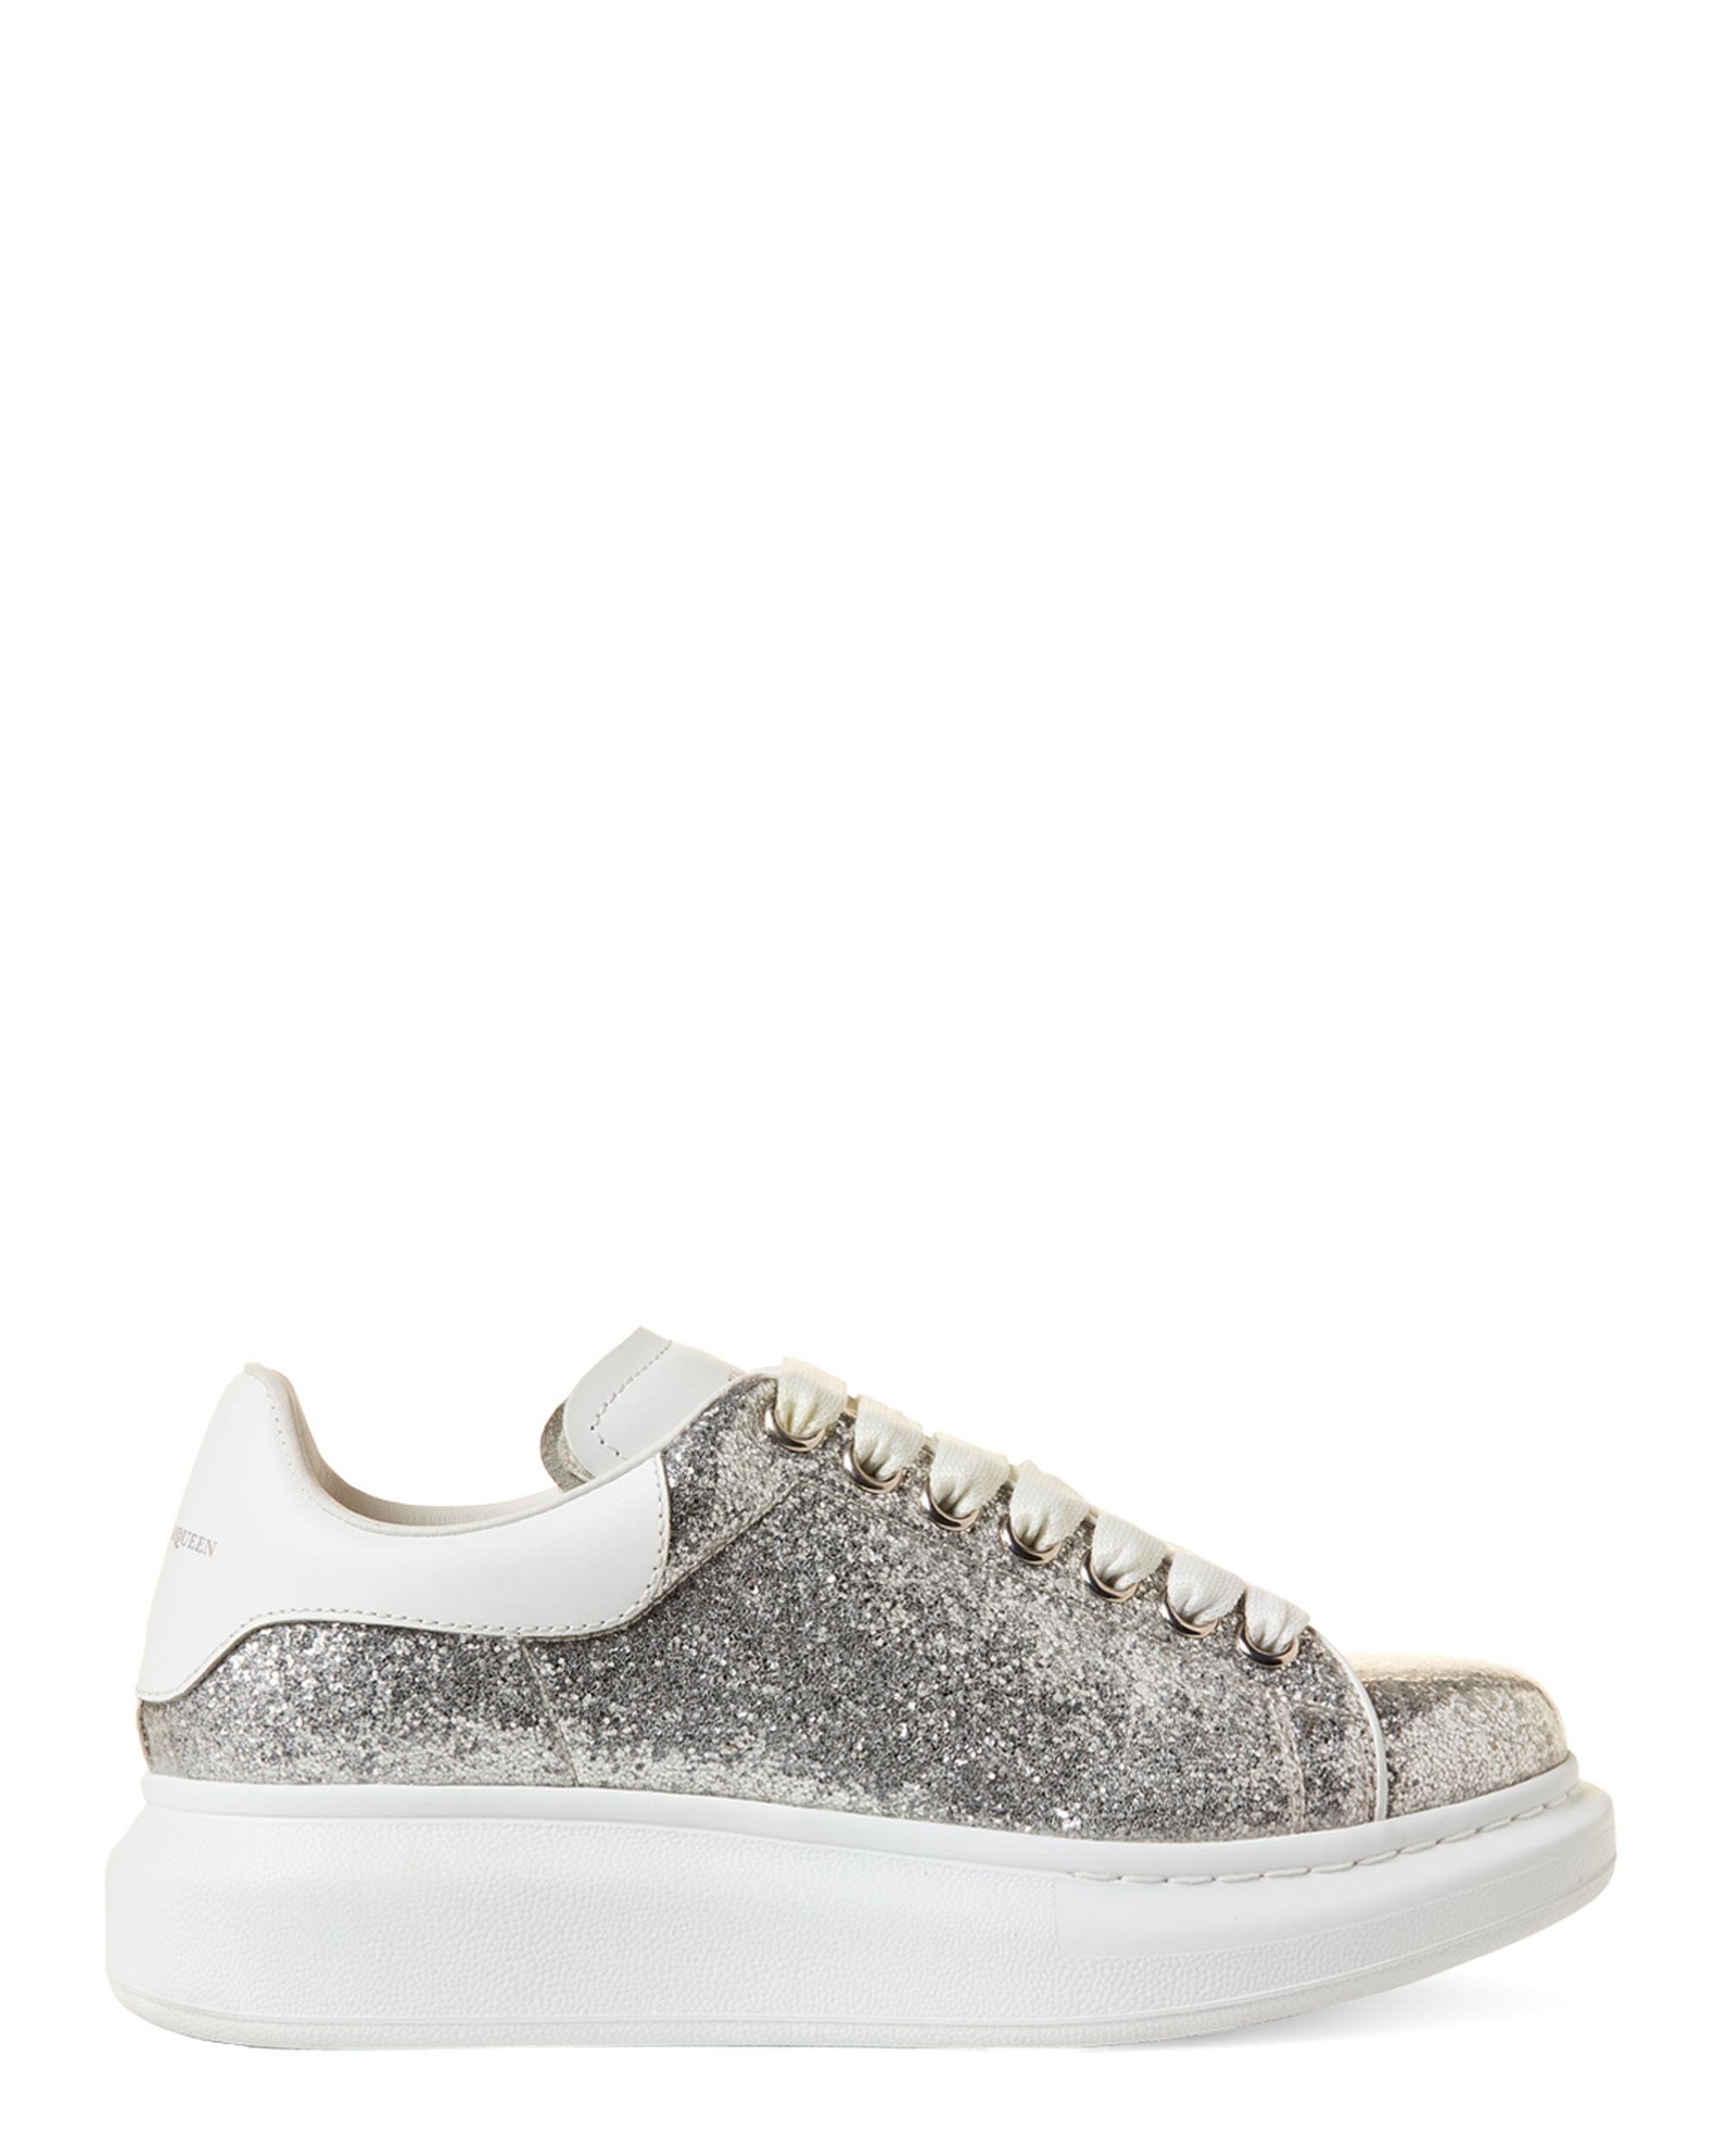 Lyst - Alexander McQueen Silver & White Glitter Platform Sneakers in White